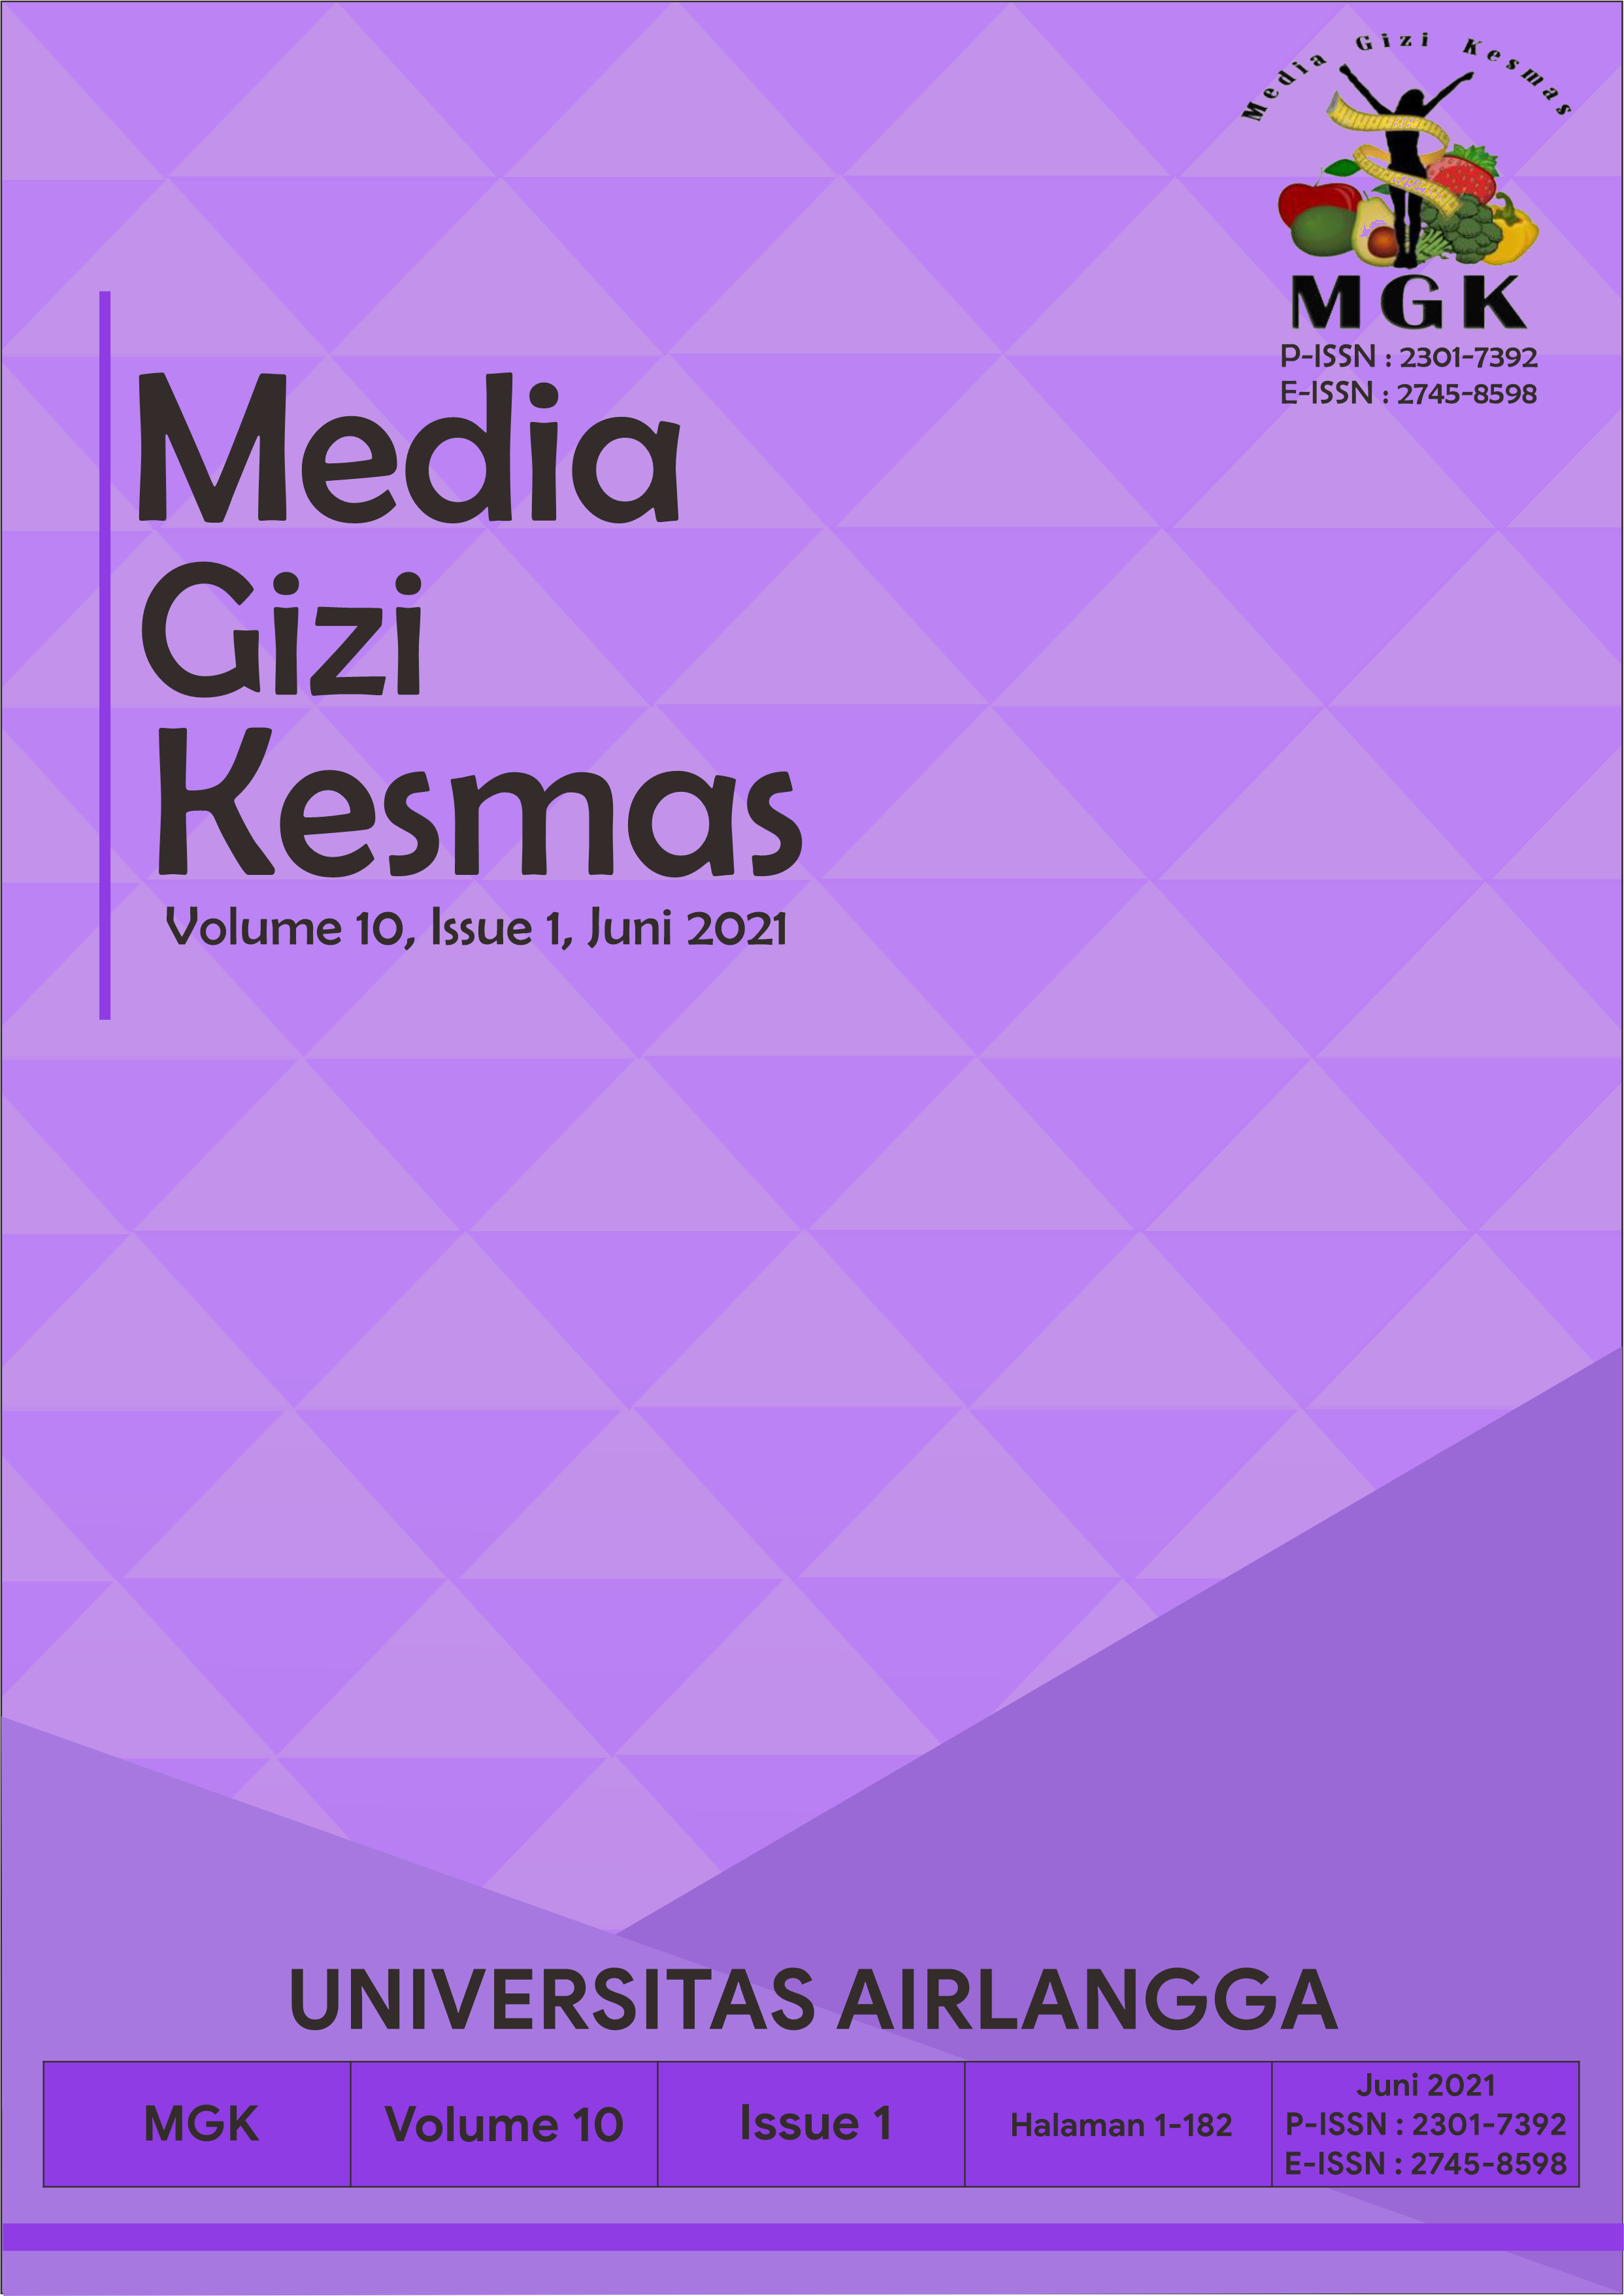 						View Vol. 10 No. 1 (2021): MEDIA GIZI KESMAS (JUNE 2021)
					